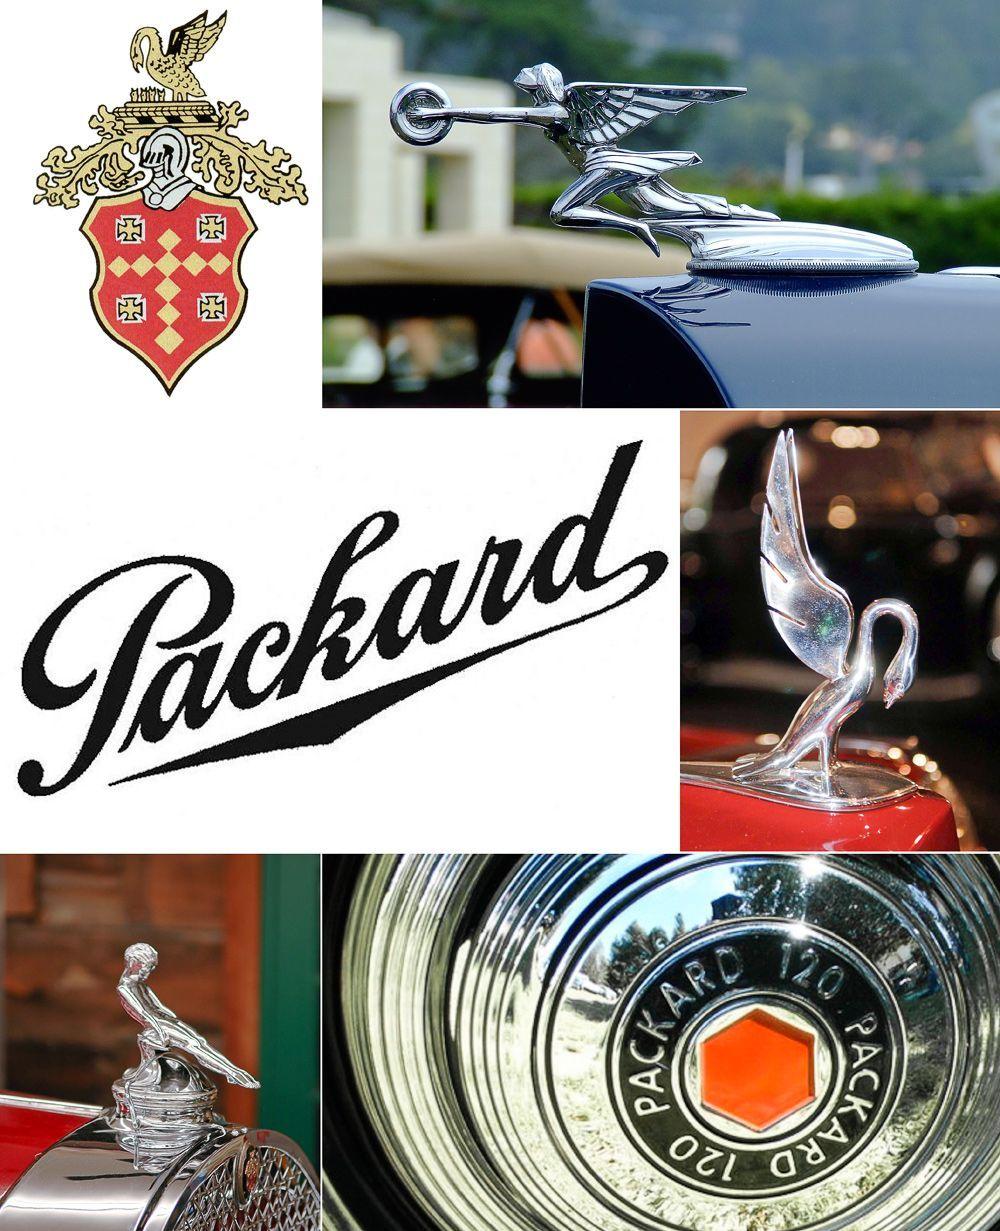 Packard Car Logo - Packard, Logo, Hubcap, and Assorted Hood Ornaments